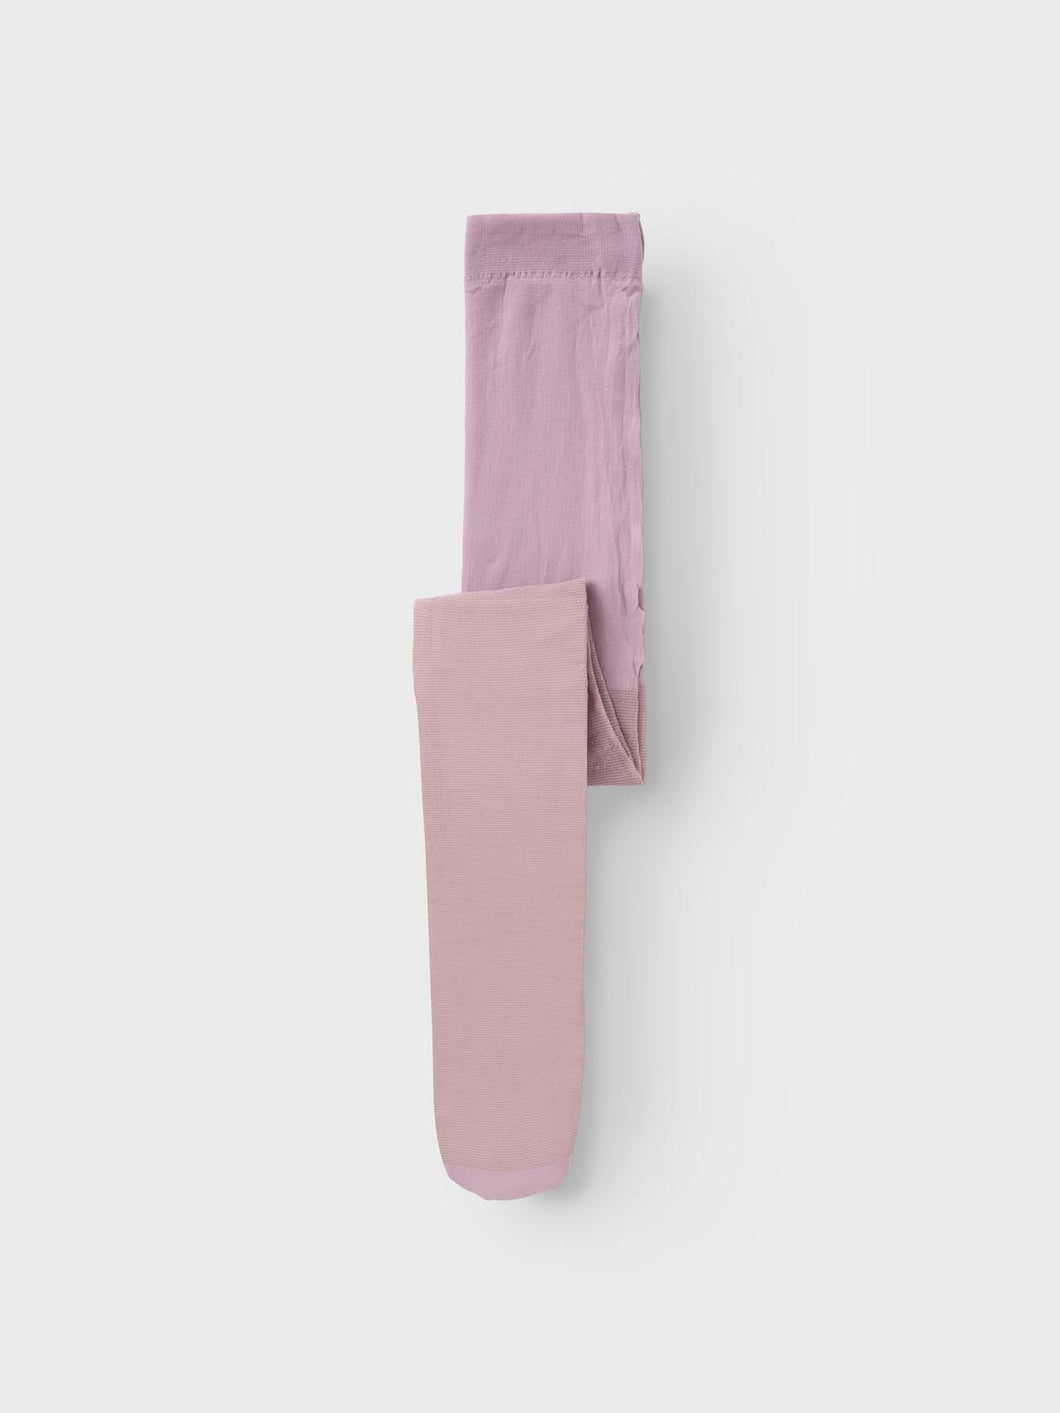 NKFROHARA Socks - Lavender Mist